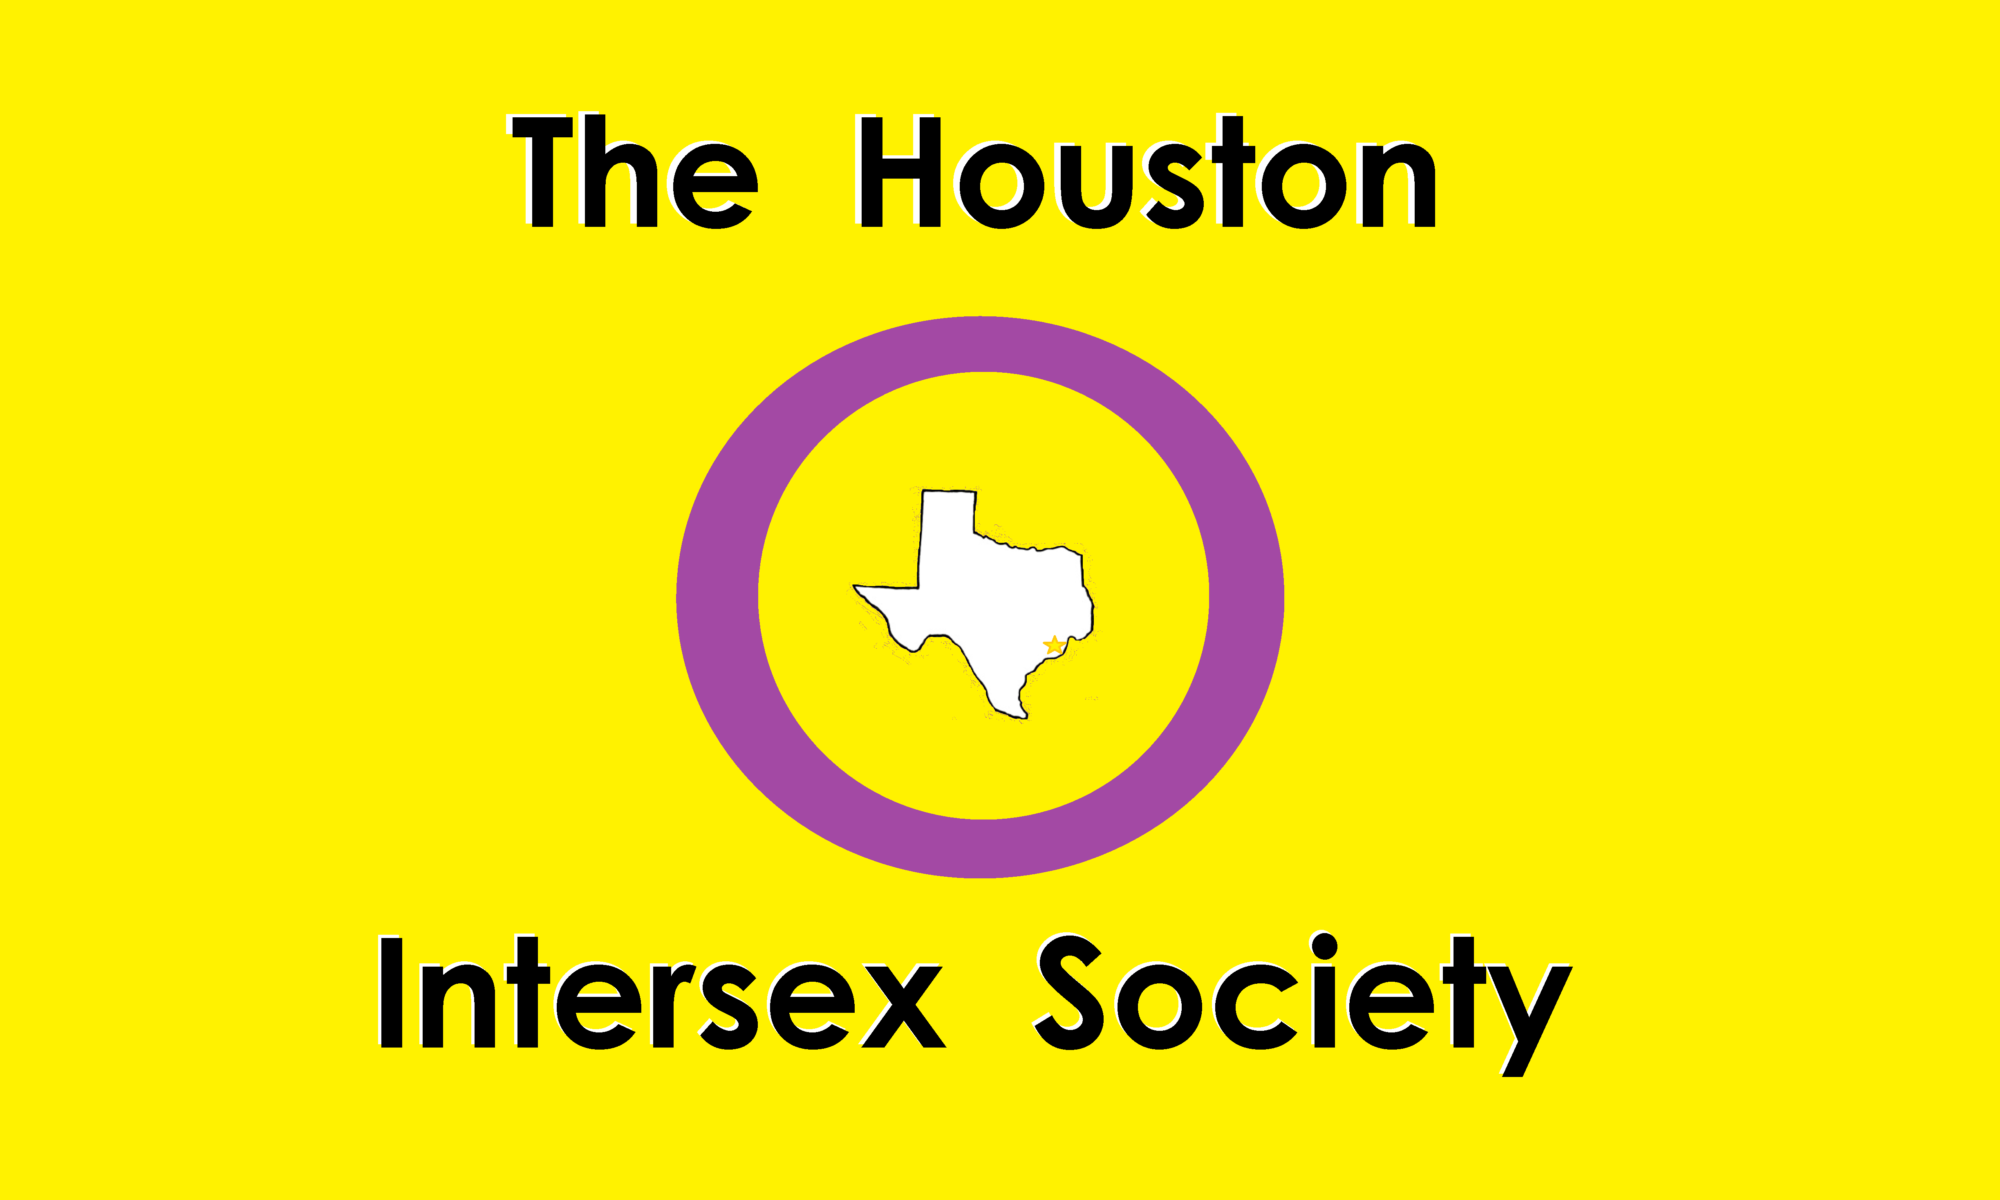 The Houston Intersex Society